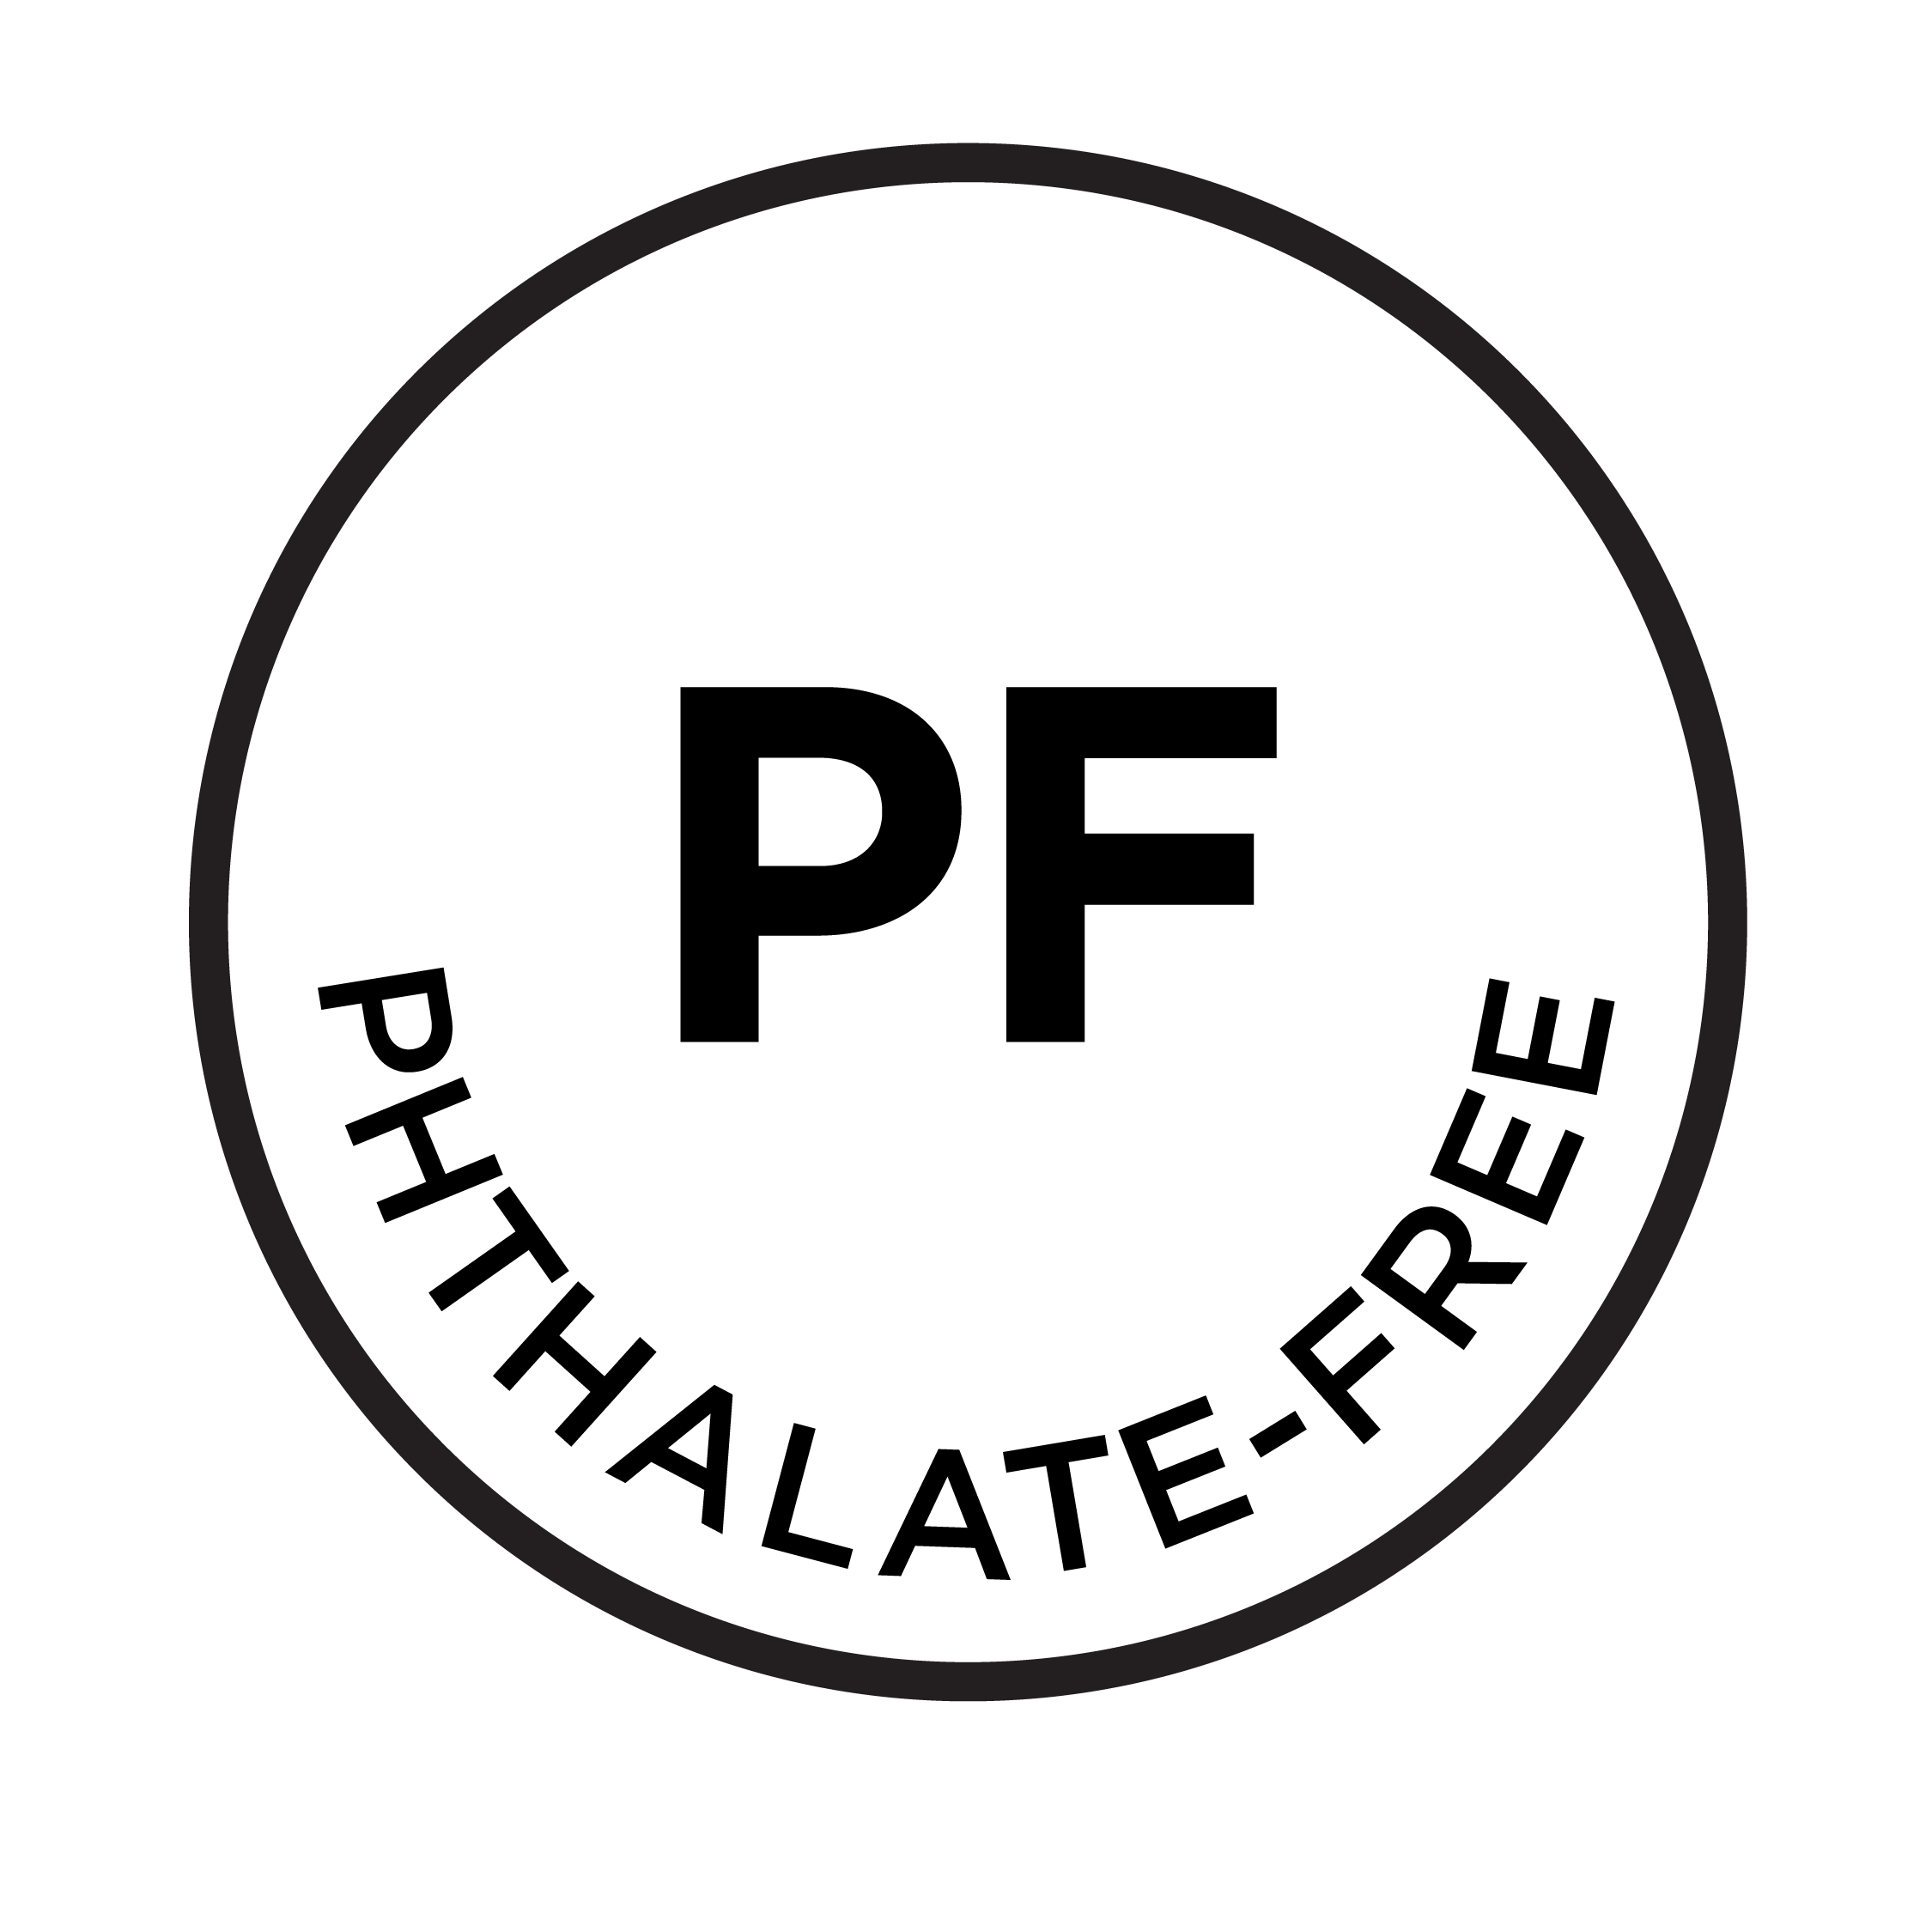 Phthalate Seal